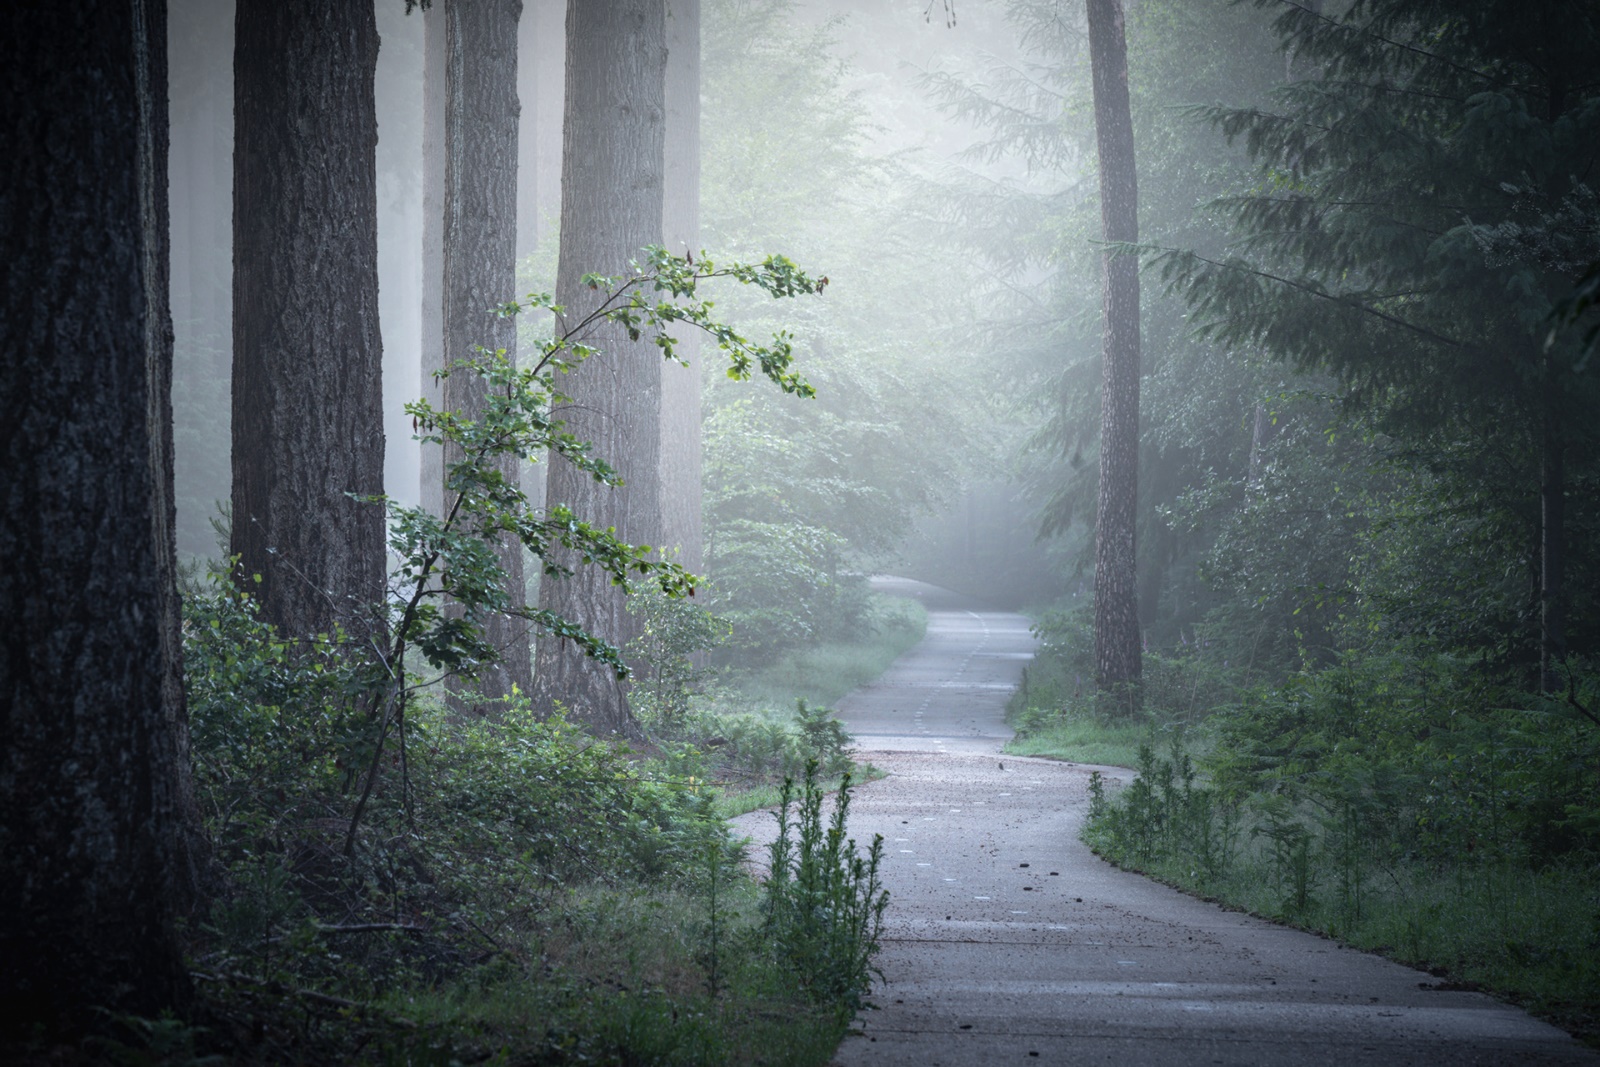 Finnish forest road in the fog / Albert Druss